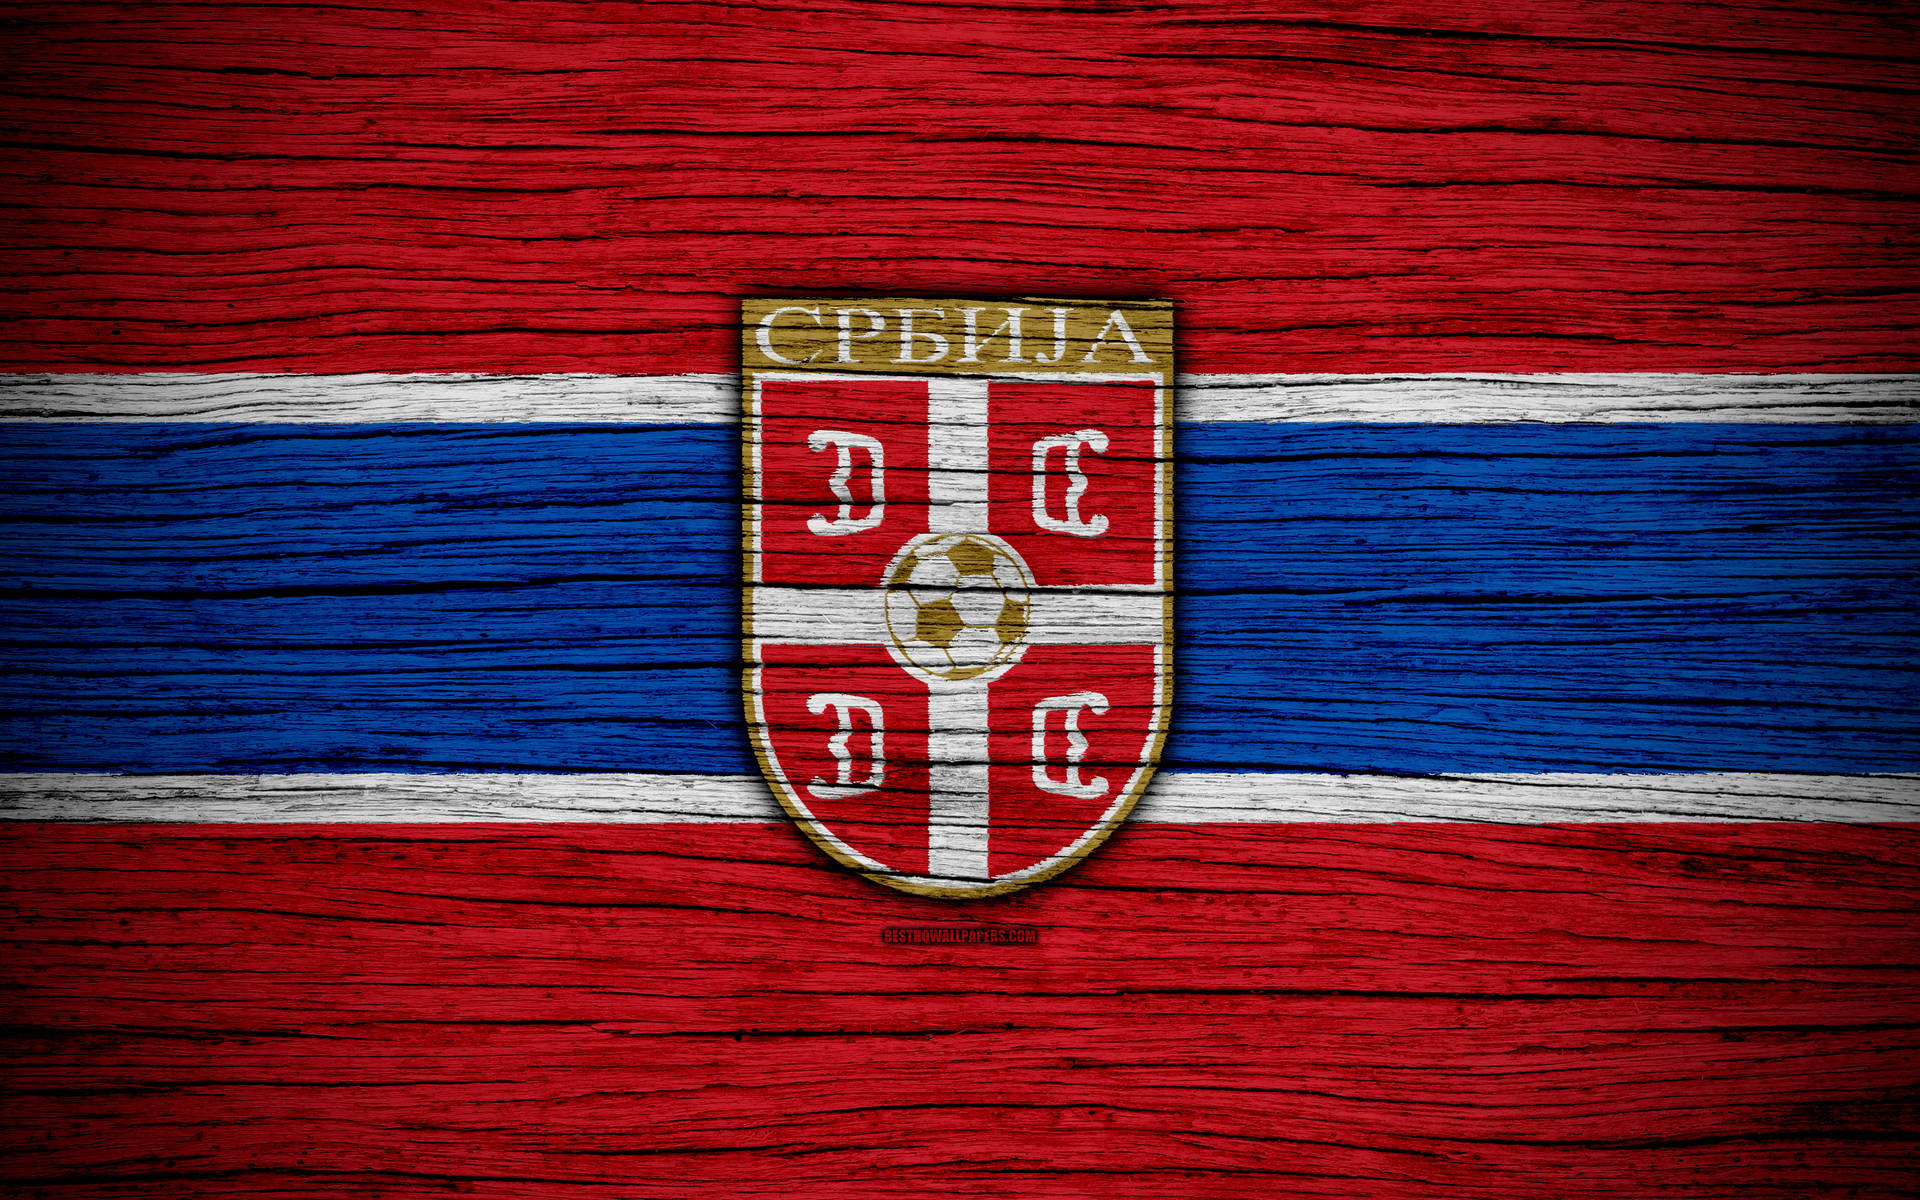 Serbia National Football Team Wood Grain Wallpaper